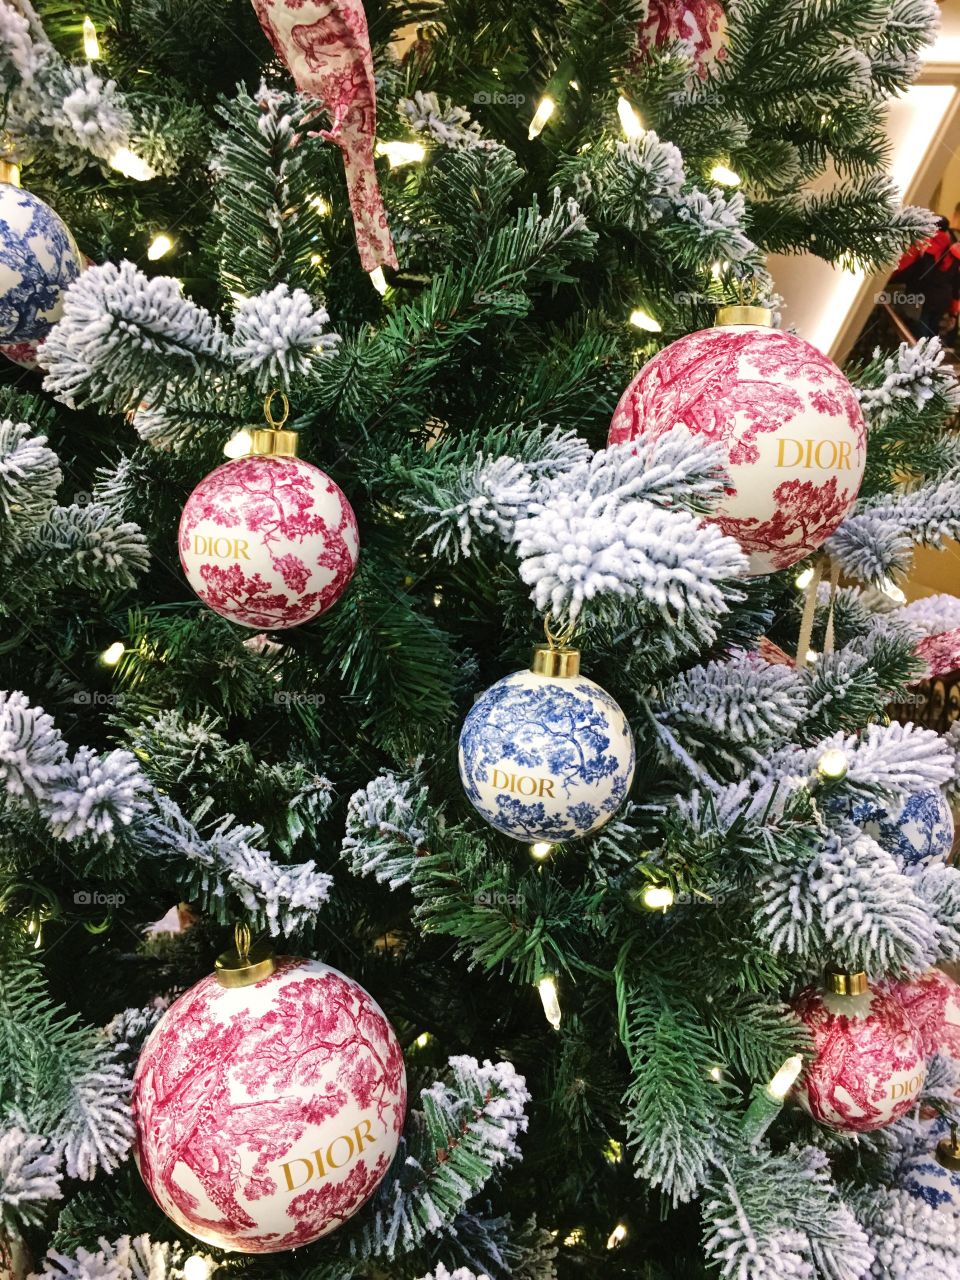 Christmas Tree Dior shopping